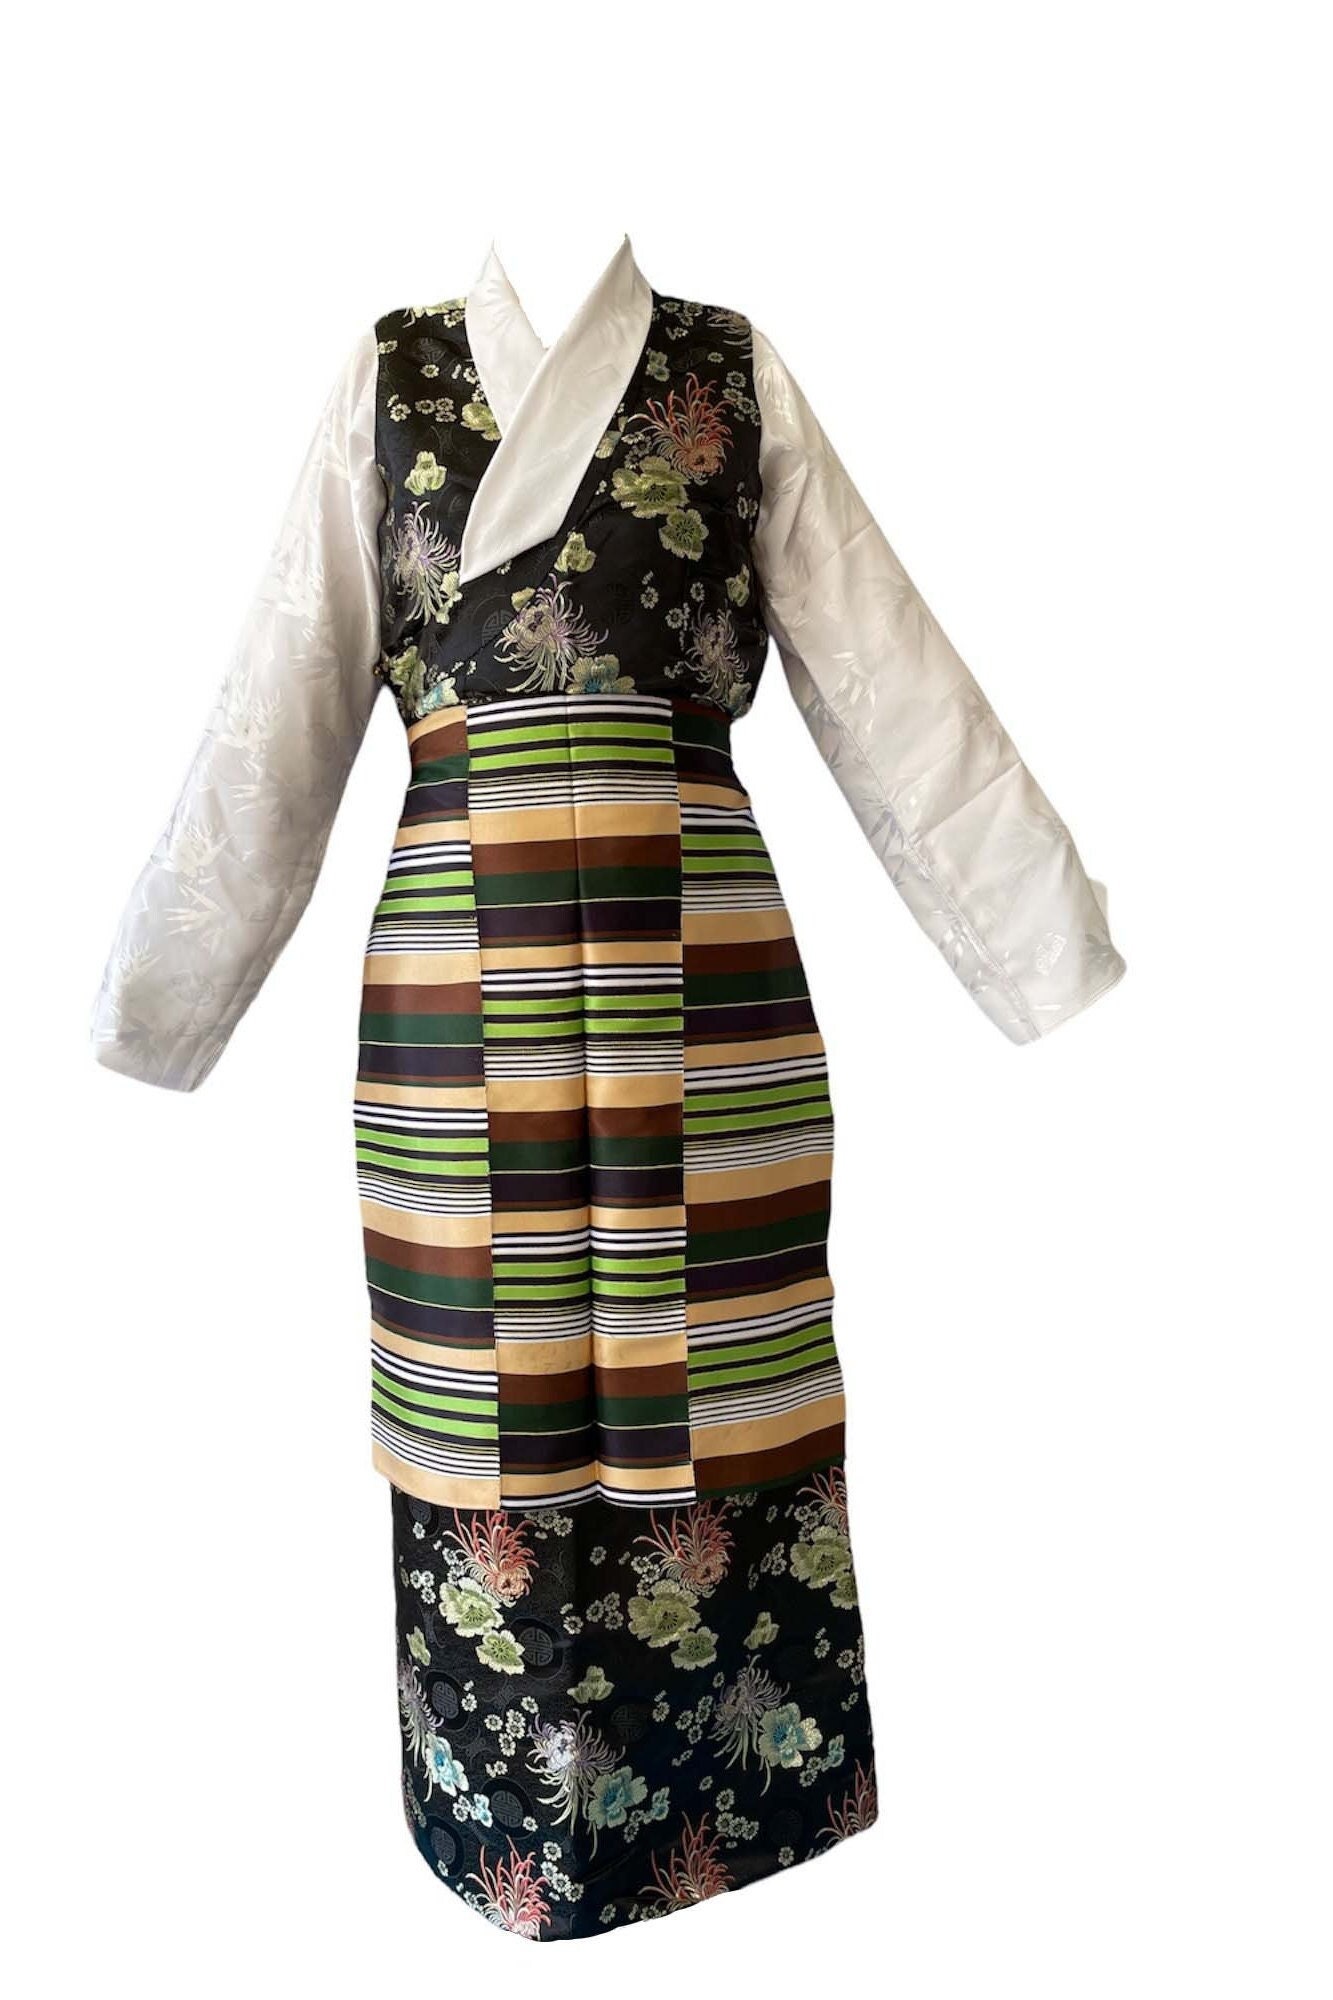 Preowned Silk Tibetan traditional dress For Women | eBay